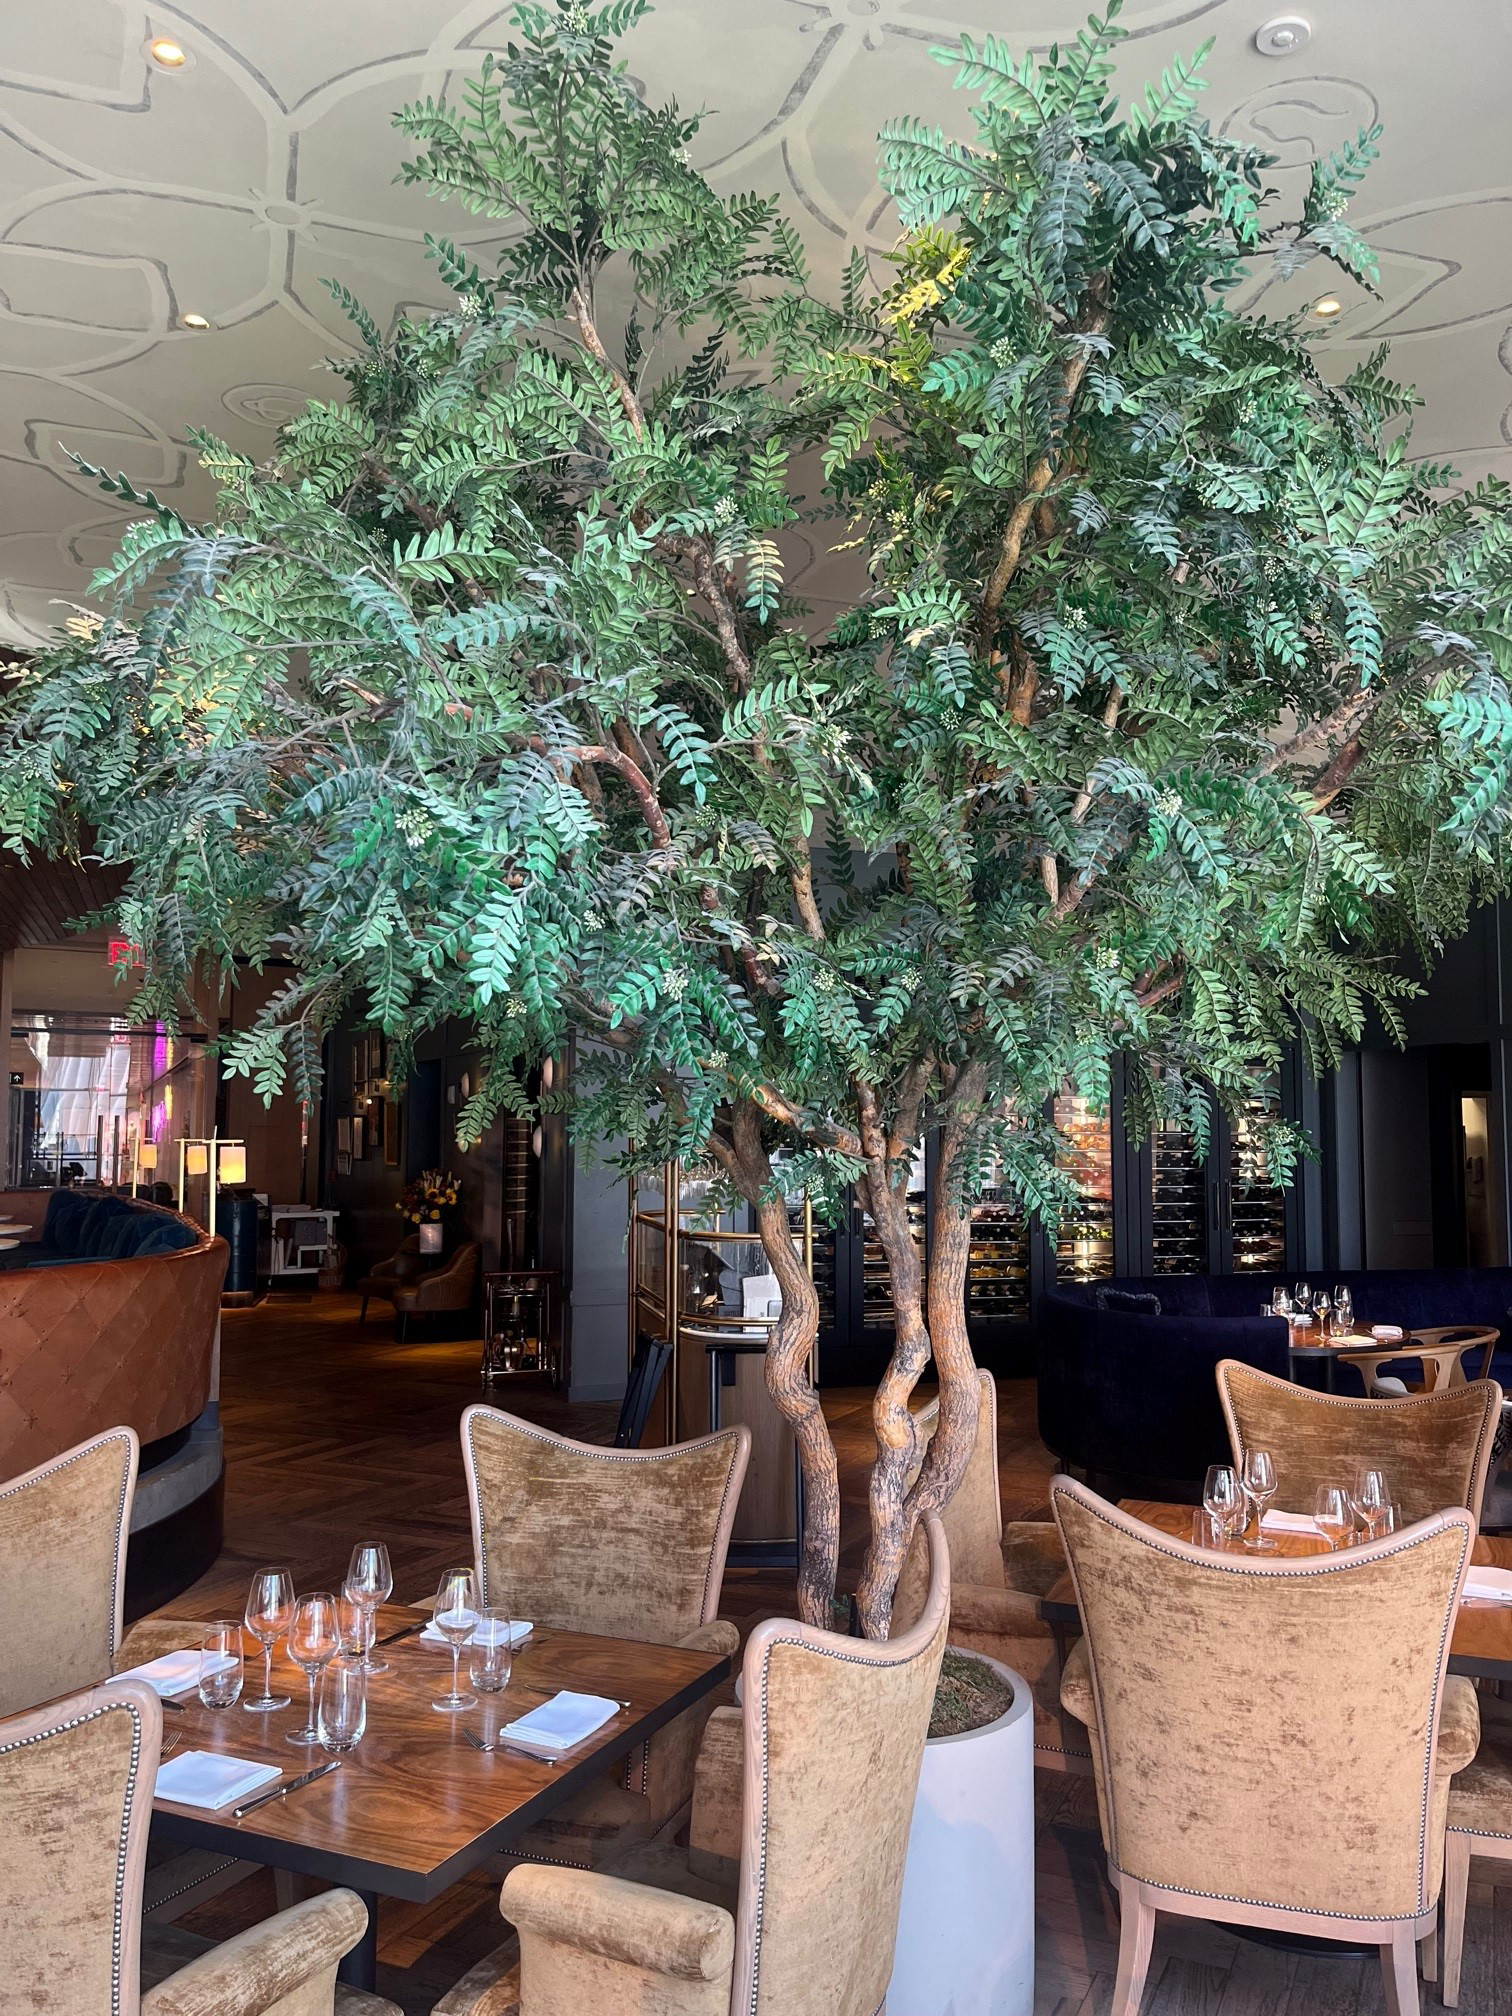 Artificial indoor Acacia tree at Queensyard Restaurant in New York